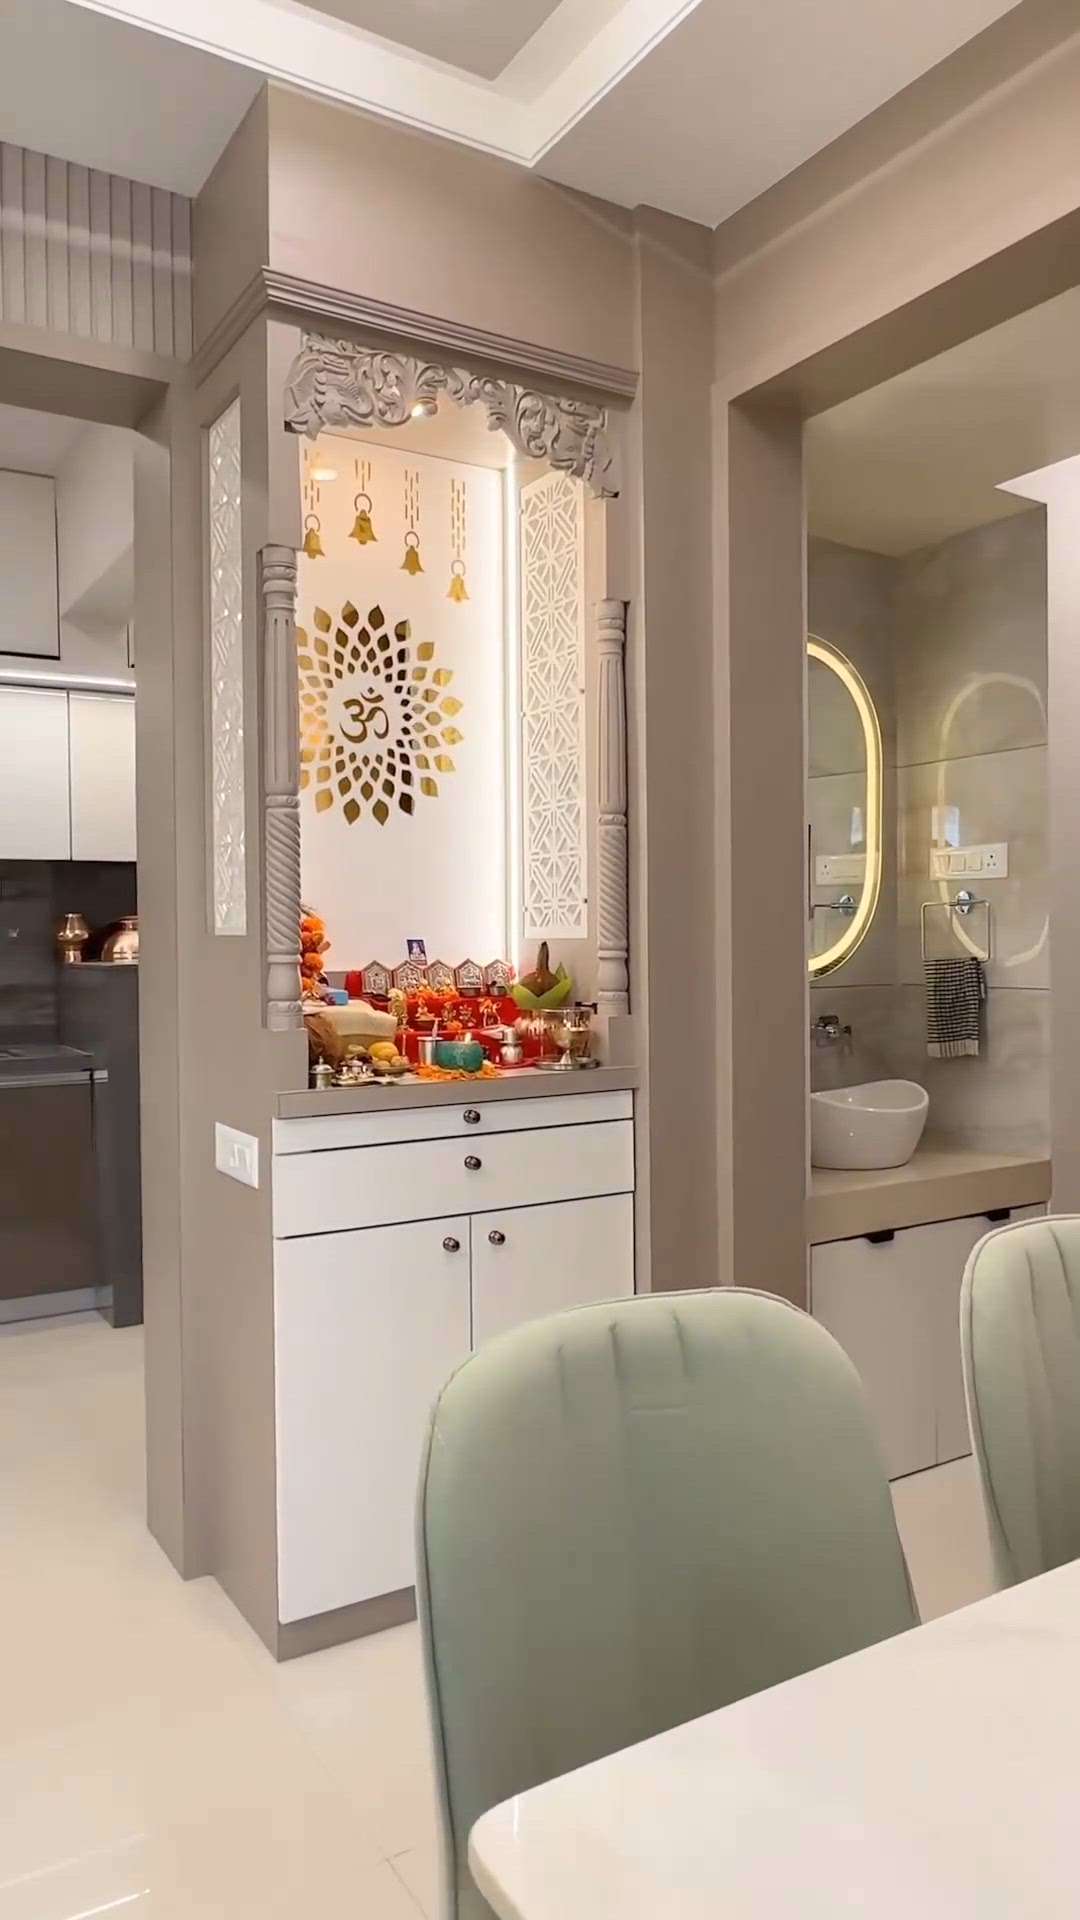 Beautiful mandir design by Majestic Interiors
#interiordesigner
#mandirdesign
#Poojaroom
#poojaroomdesign
#TEMPLE
#latestkitchendesign
#modular_kitchen
#kitchendesign
#ModularKitchen
#lshapedkitchen
#ushapekitchen
#modular_kitchen_in_faridabad
#awesome
#kitchendesigner
WWW.MAJESTICINTERIORS.CO.IN
9911692170